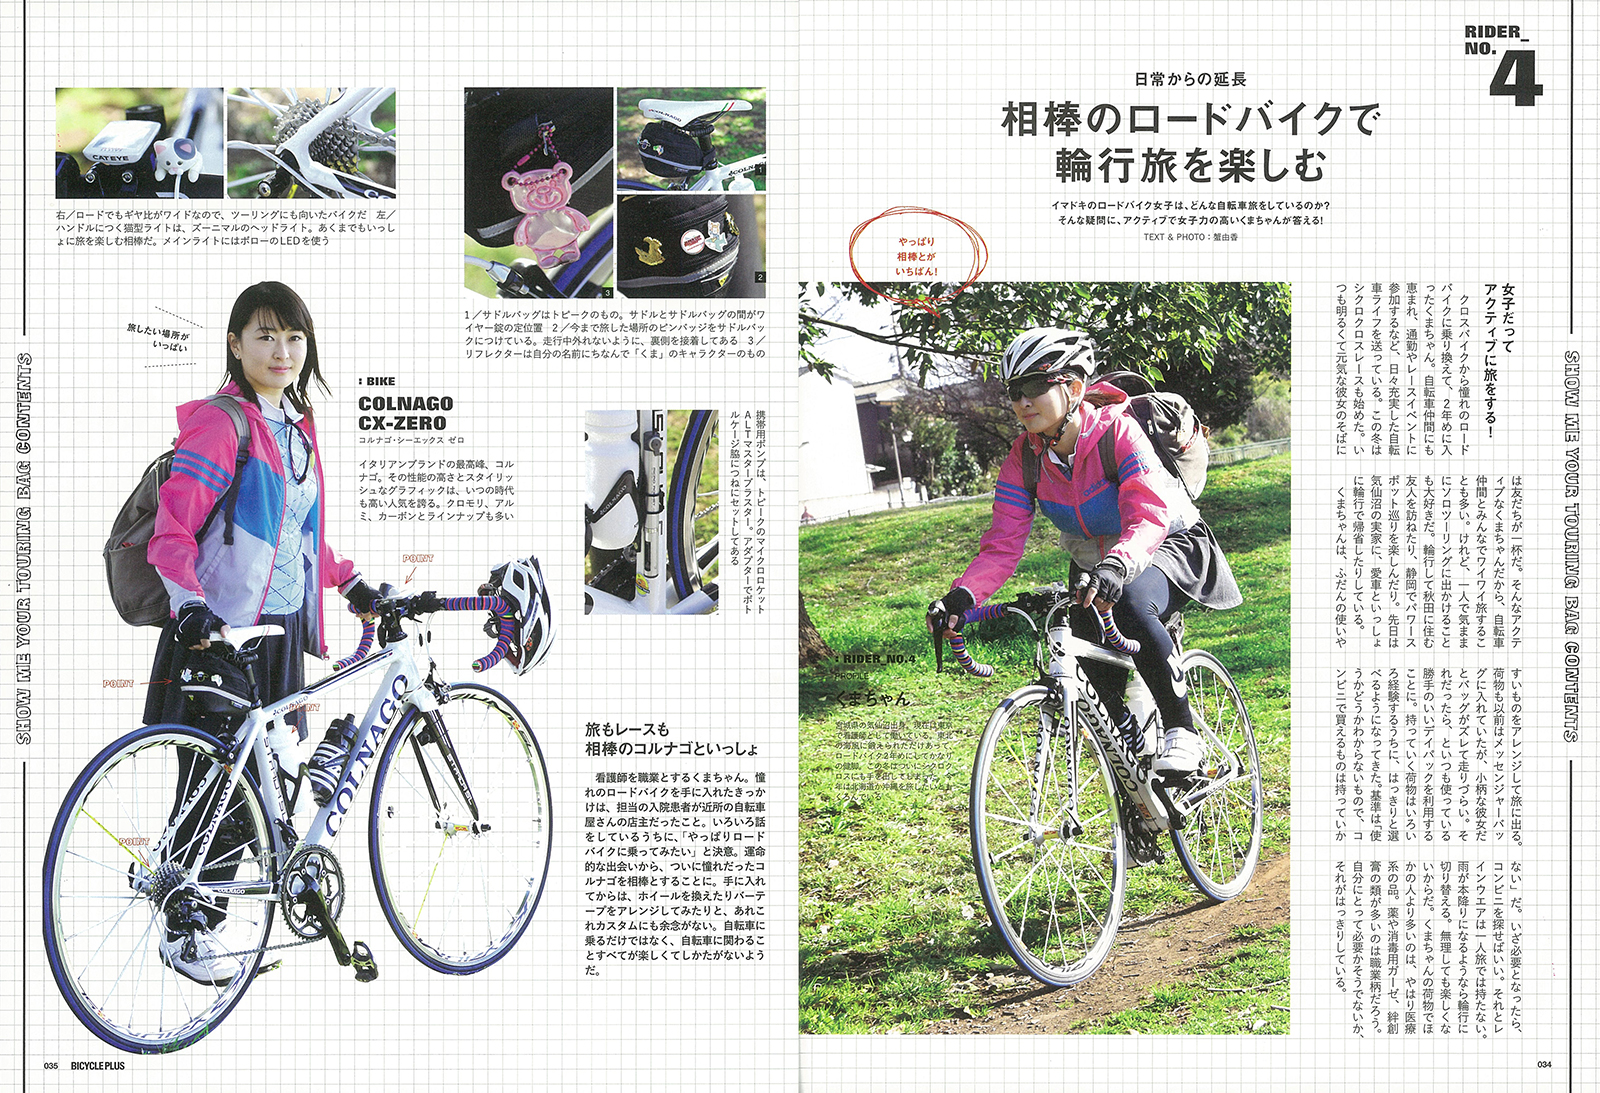 COLNAGO JAPAN Official Blog: 雑誌「BICYCLE PLUS」掲載のお知らせ